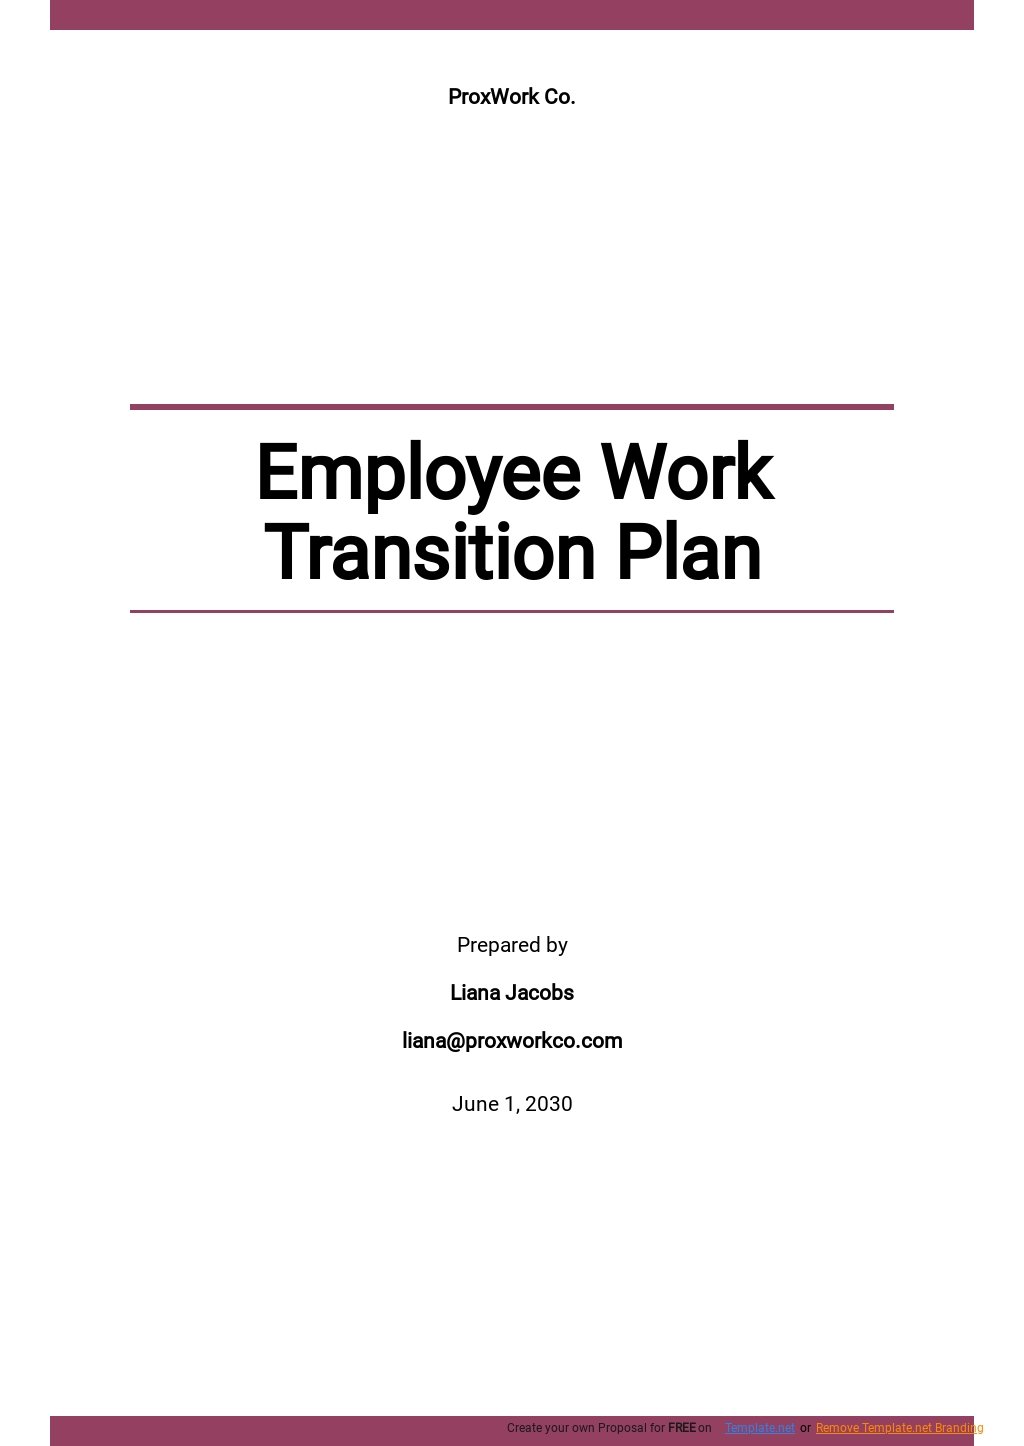 Employee Work Transition Plan Template